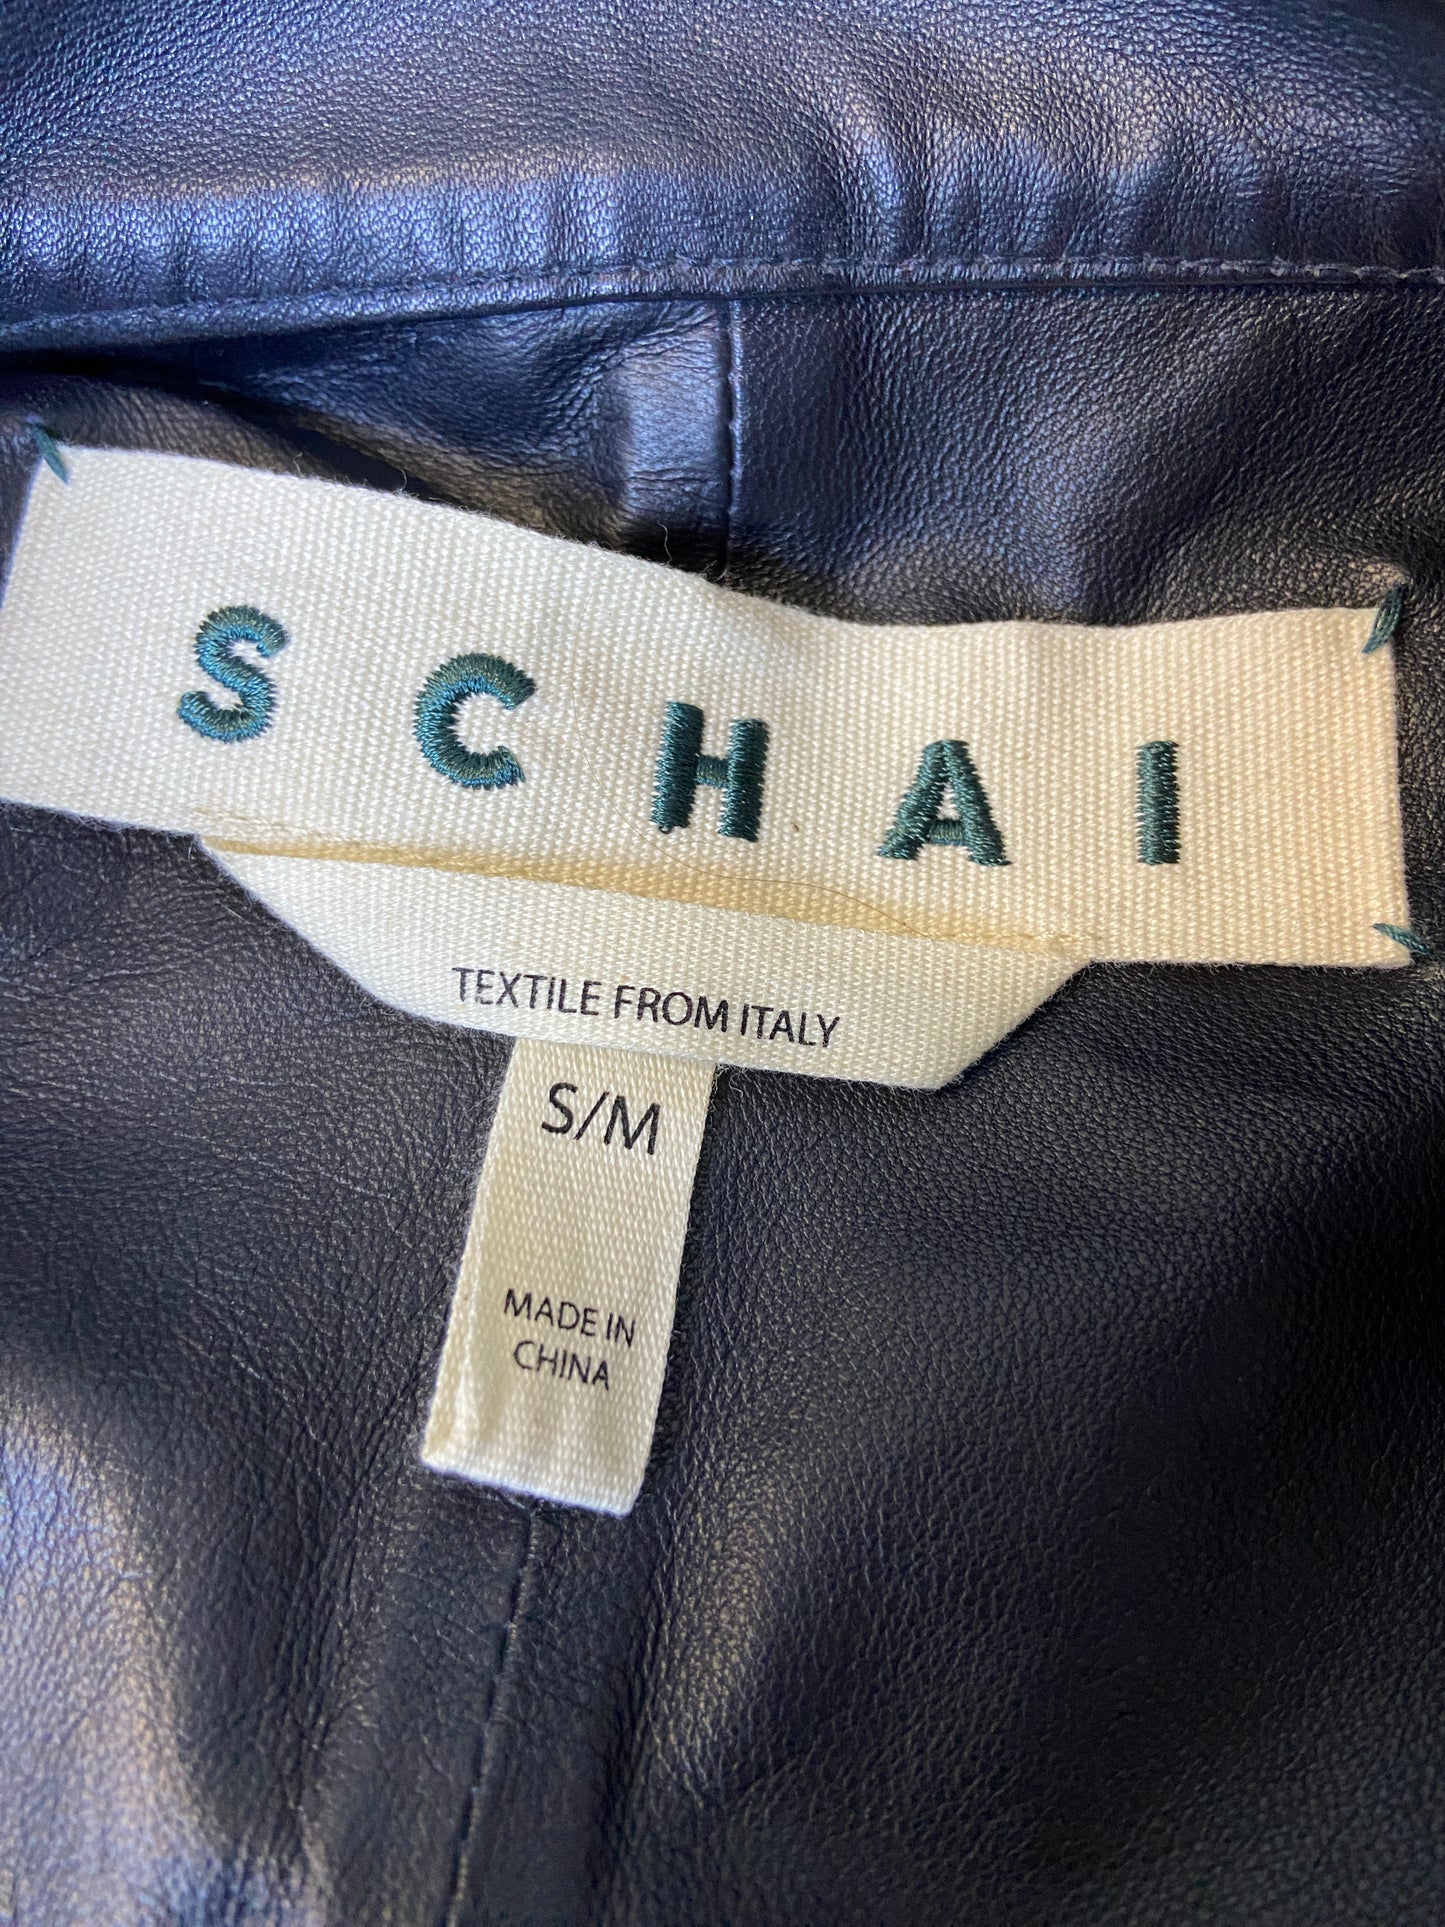 SCHAI Size S/M Black Leather Tunic Top